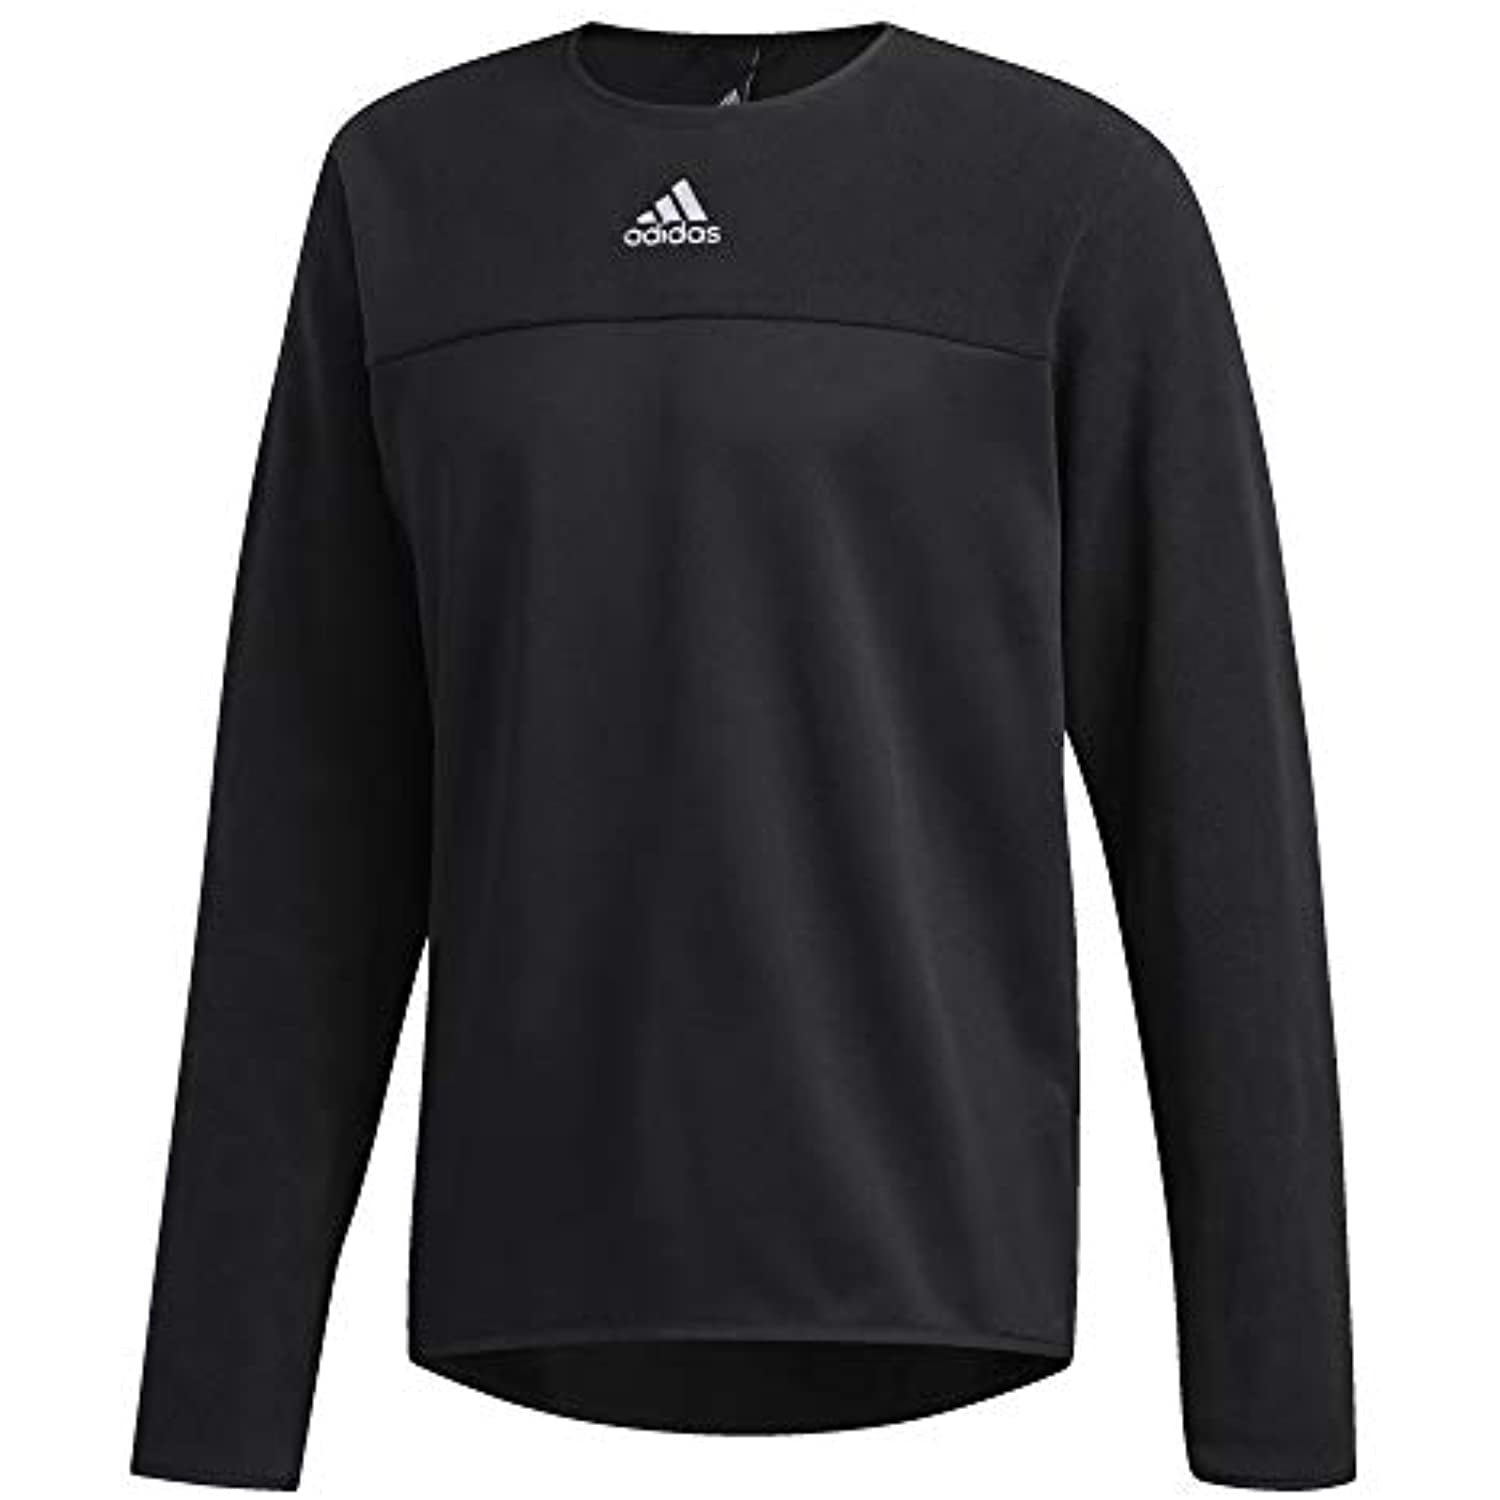 adidas Team Issue Sweatshirt, Black/Black, XX-Large - Walmart.com